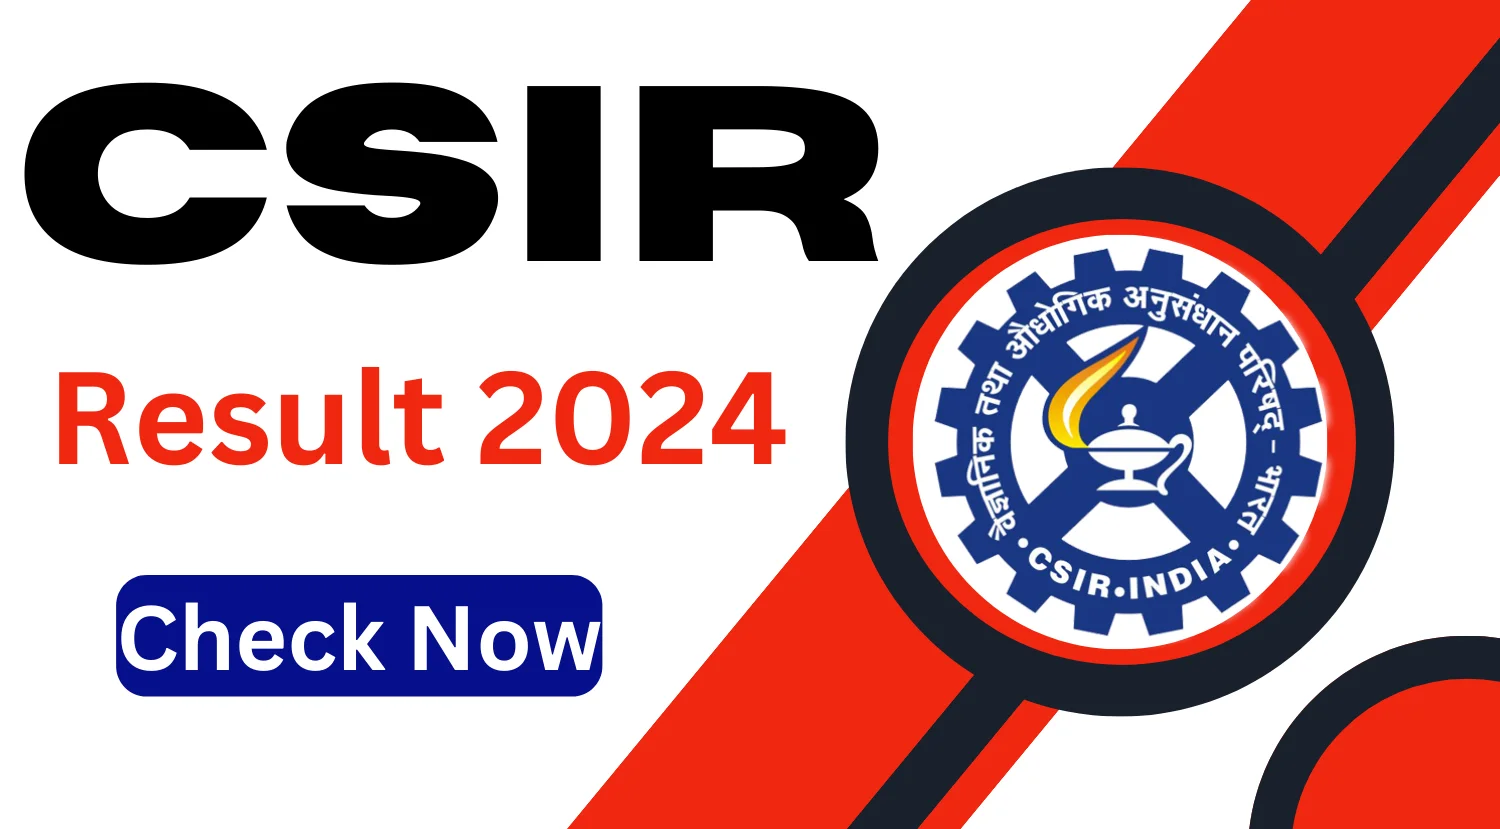 CSIR SO ASO Result 2024